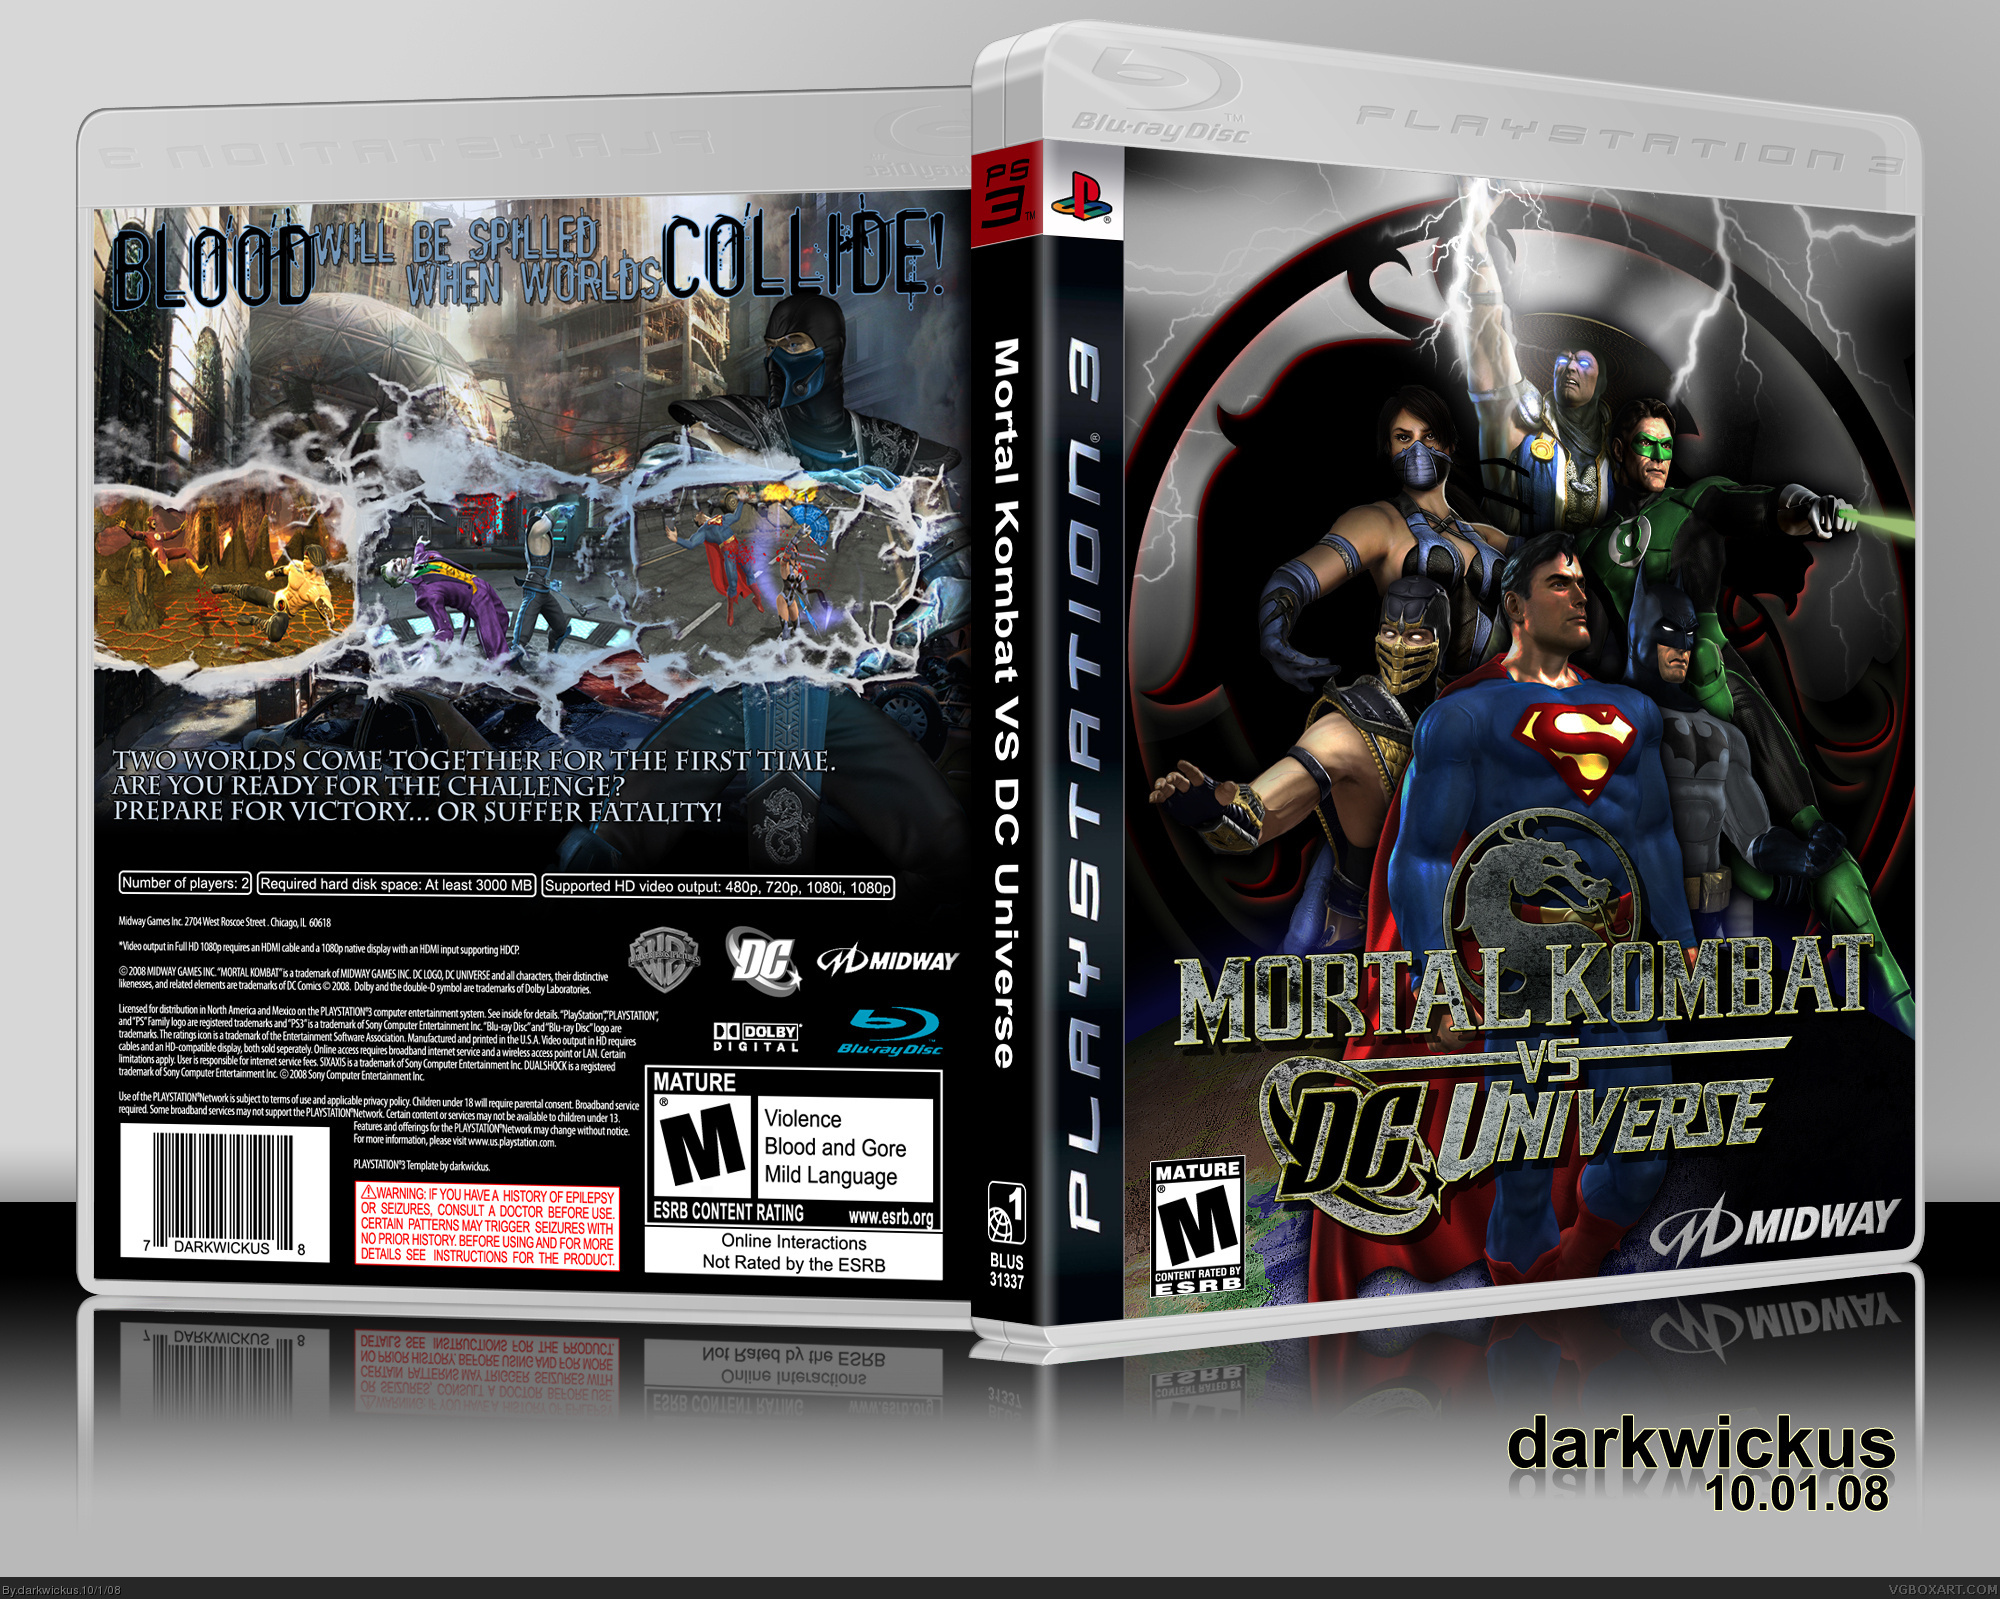 Мортал комбат на xbox 360 freeboot. Mortal Kombat vs DC Universe 2008 Xbox 360. Mortal Kombat vs DC Universe Xbox 360. Mortal Kombat vs. DC Universe (2008). Мортал комбат vs DC Universe ps3.